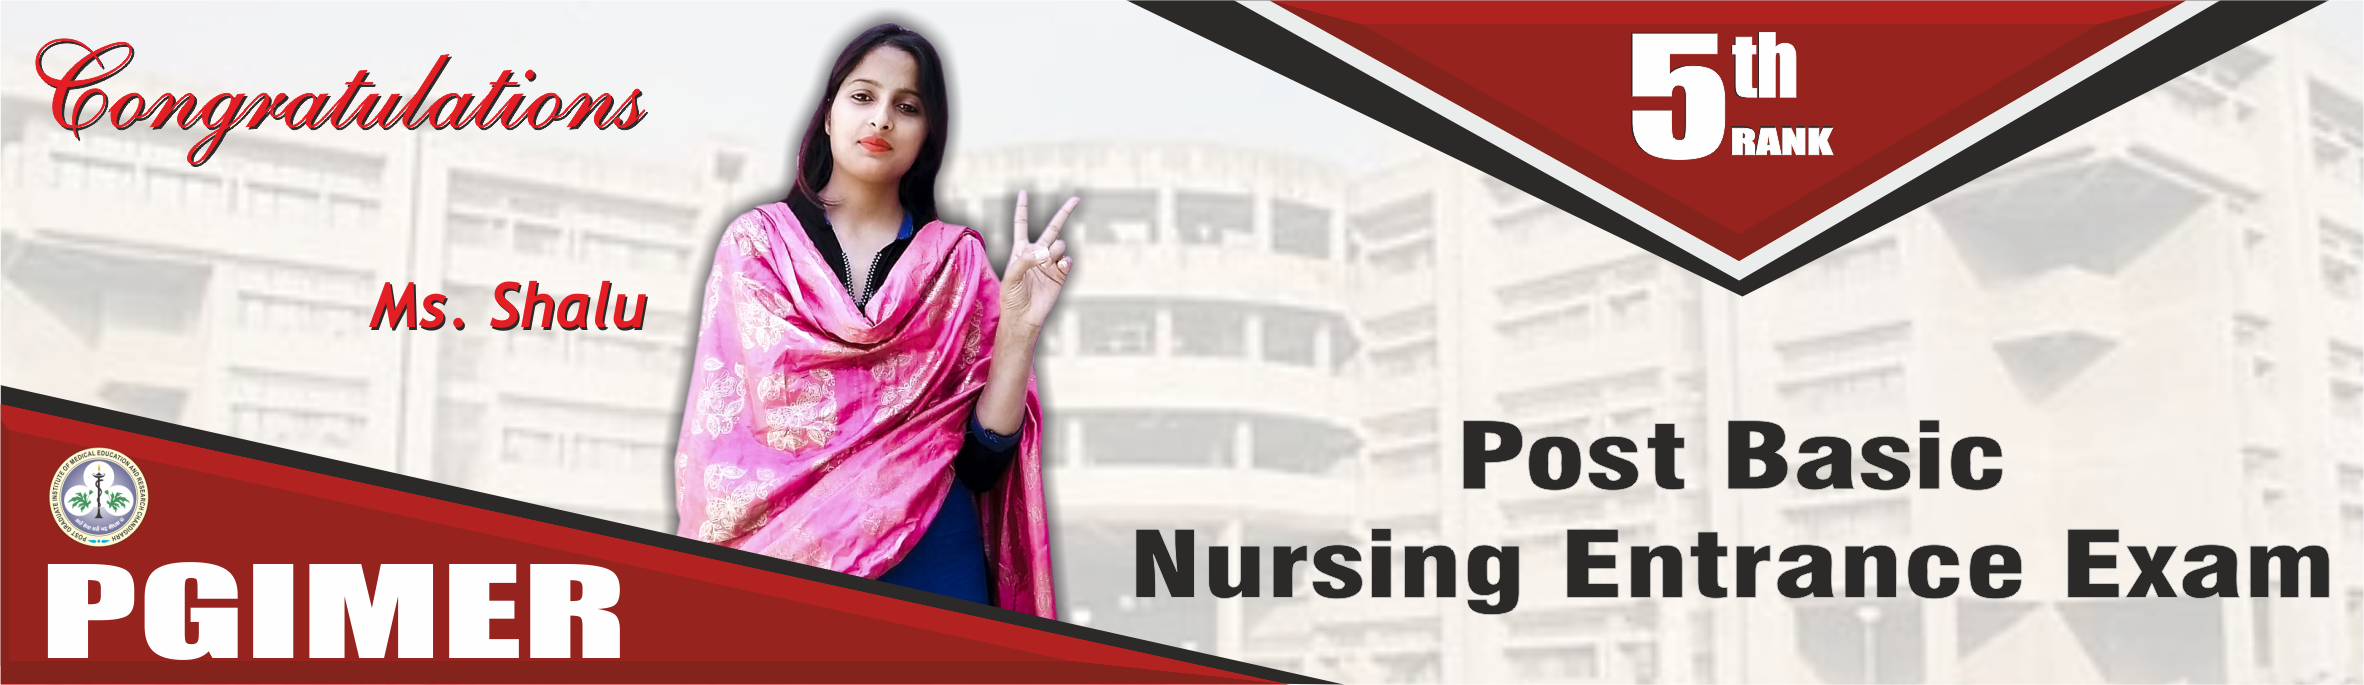 PGIMER Post Basic Nursing Entrance Coaching